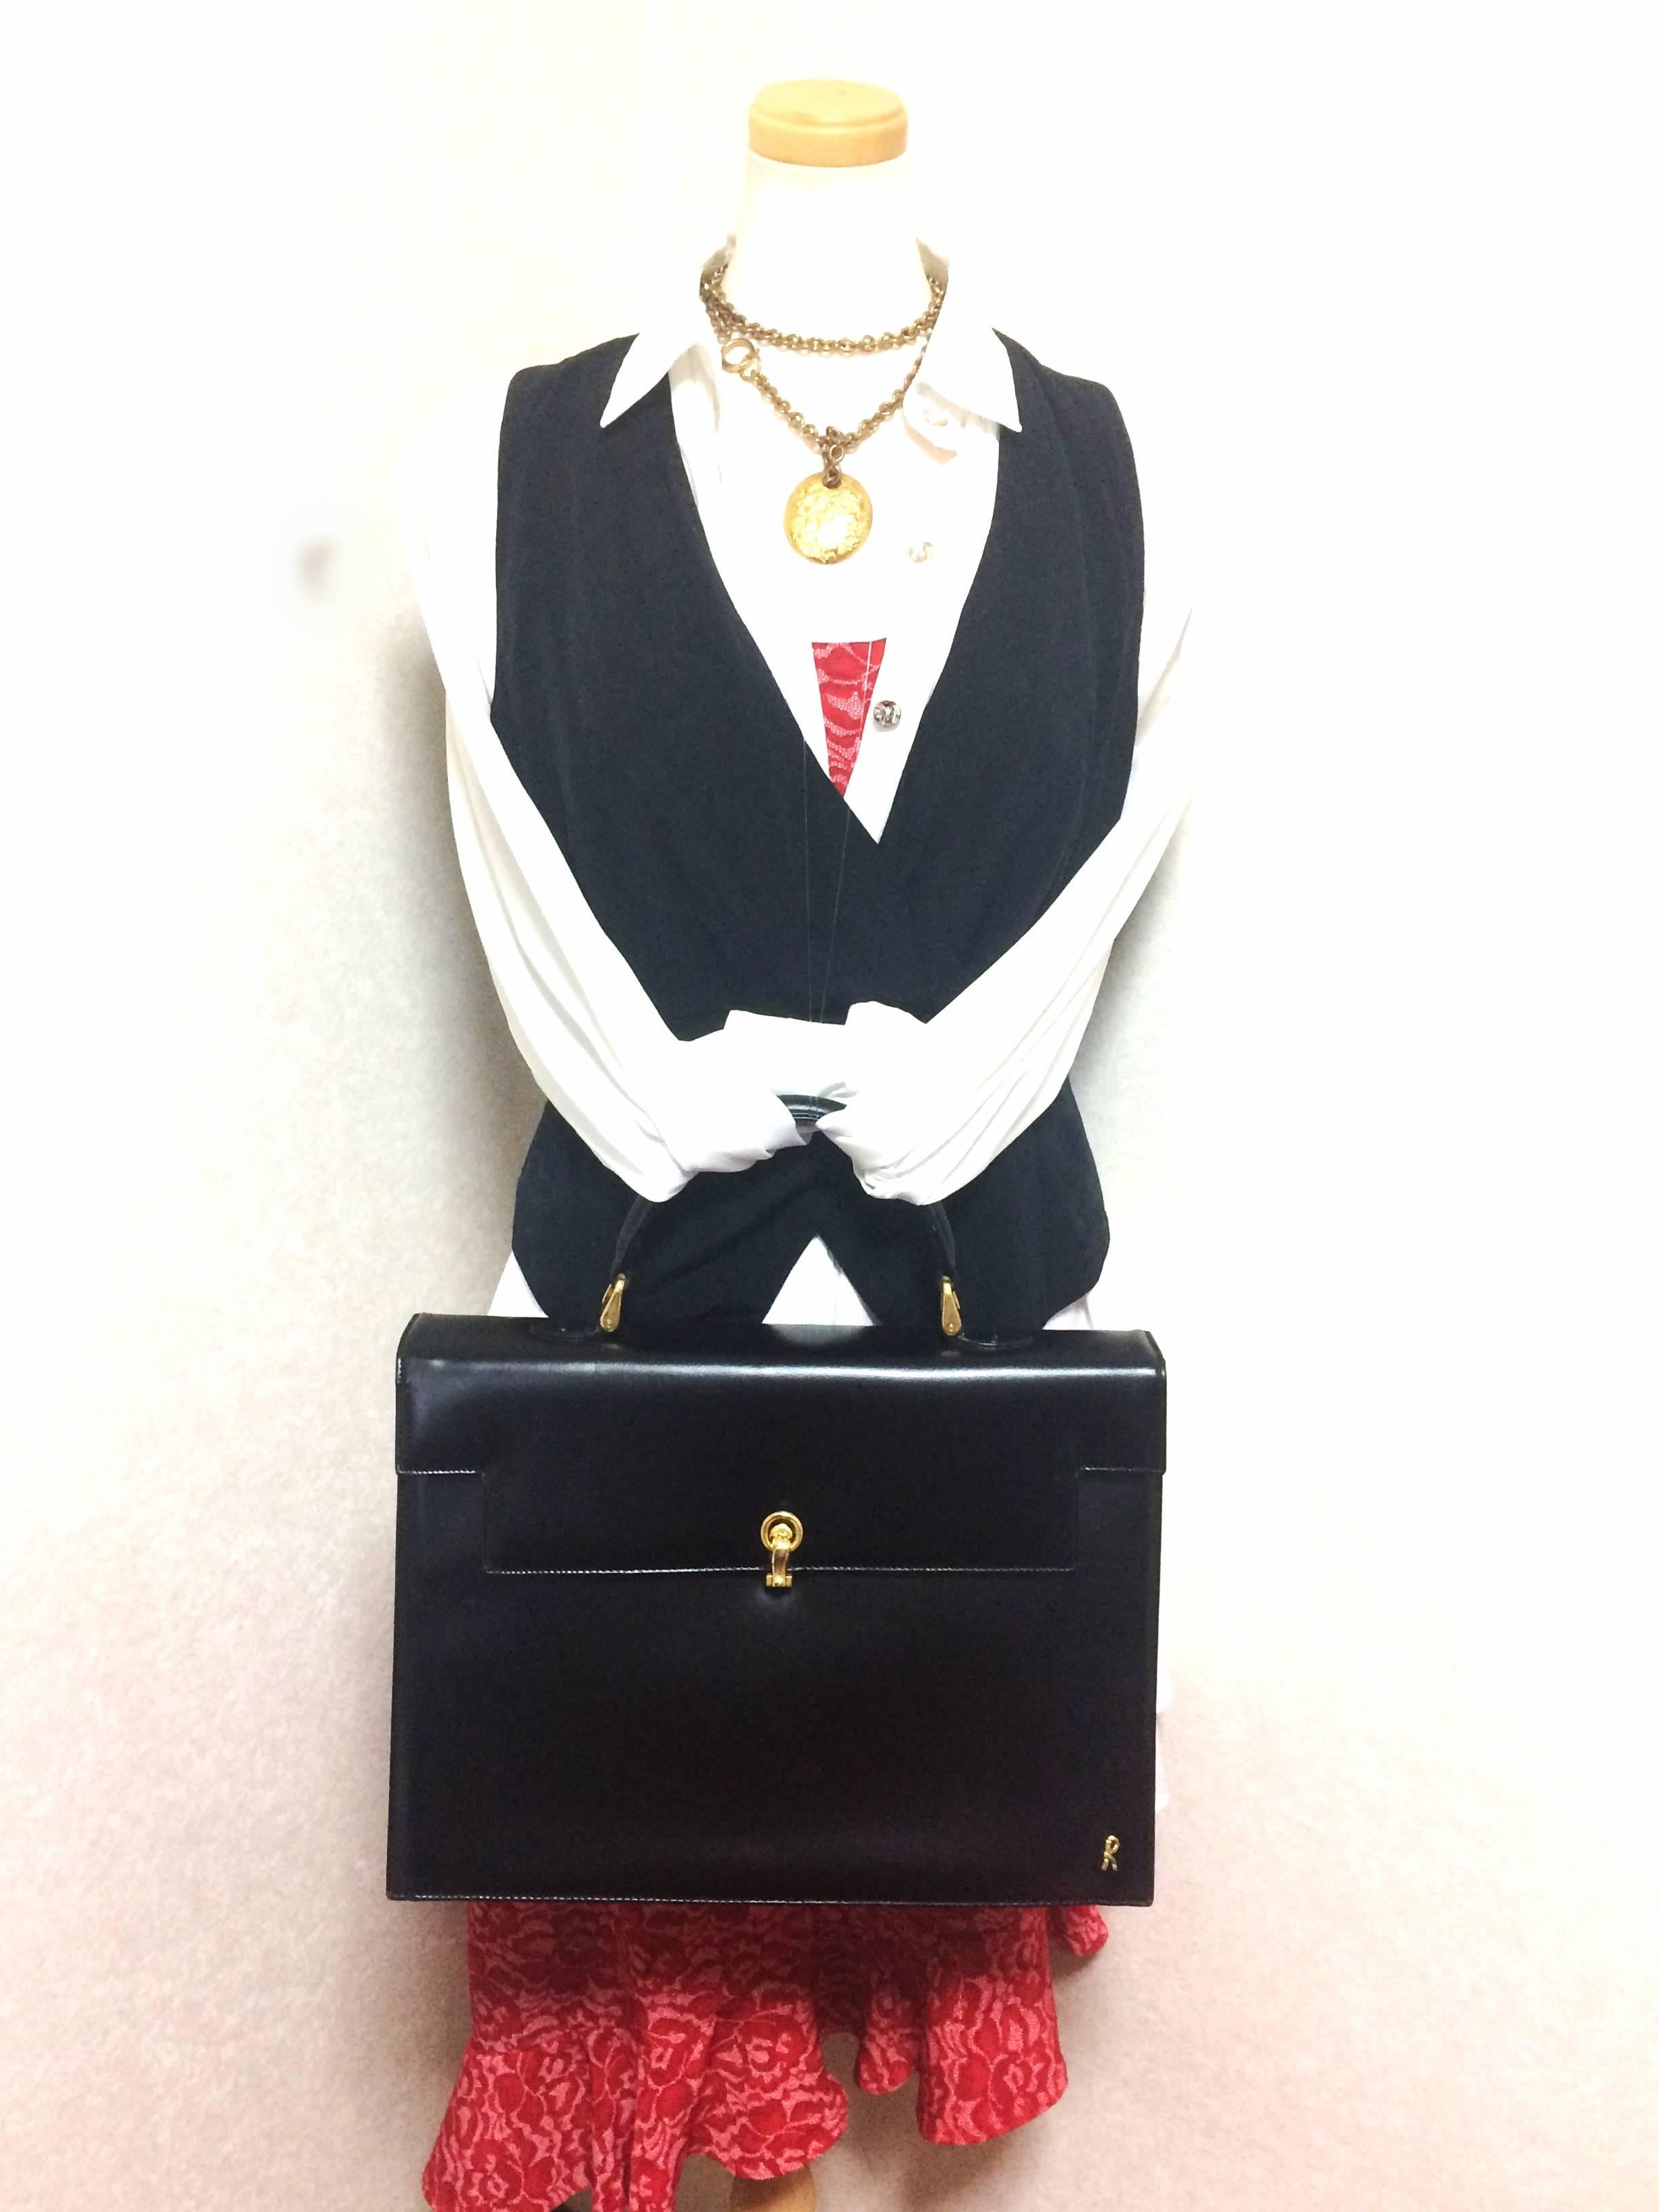 Vintage Roberta di Camerino black Kelly bag with golden logo and shoulder strap. 5